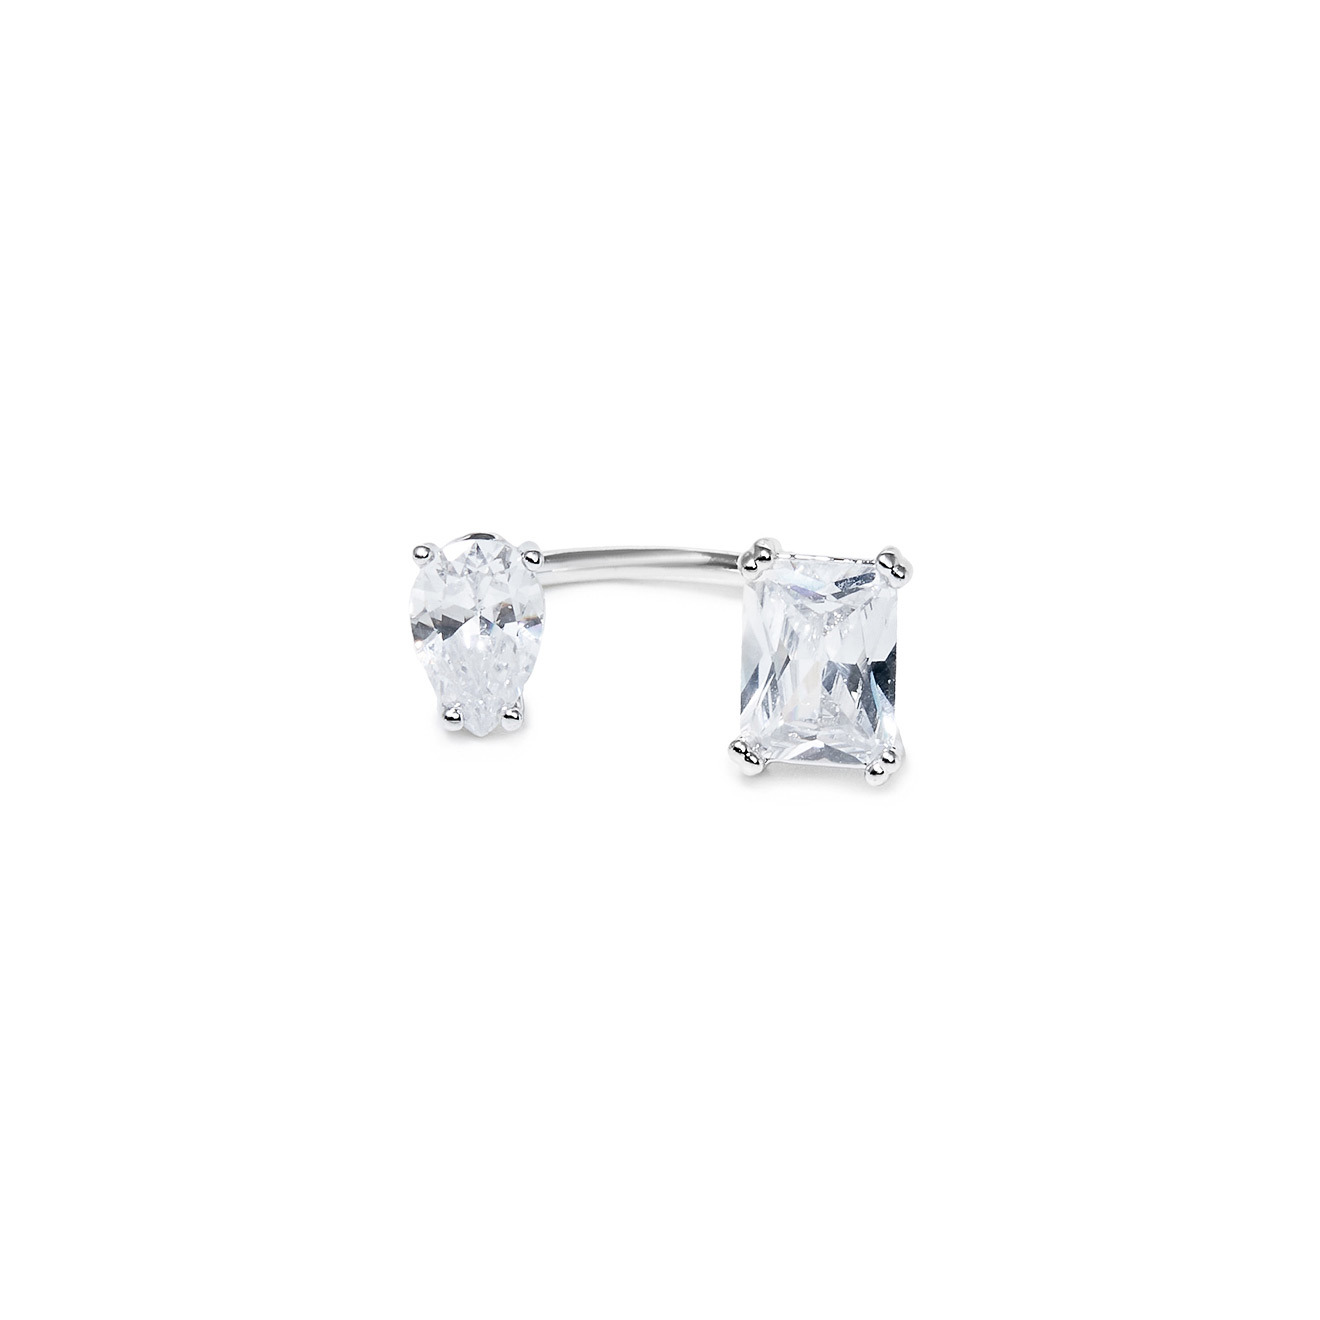 lisa smith незамкнутое серебристое кольцо волна Herald Percy Серебристое незамкнутое кольцо с кристаллами